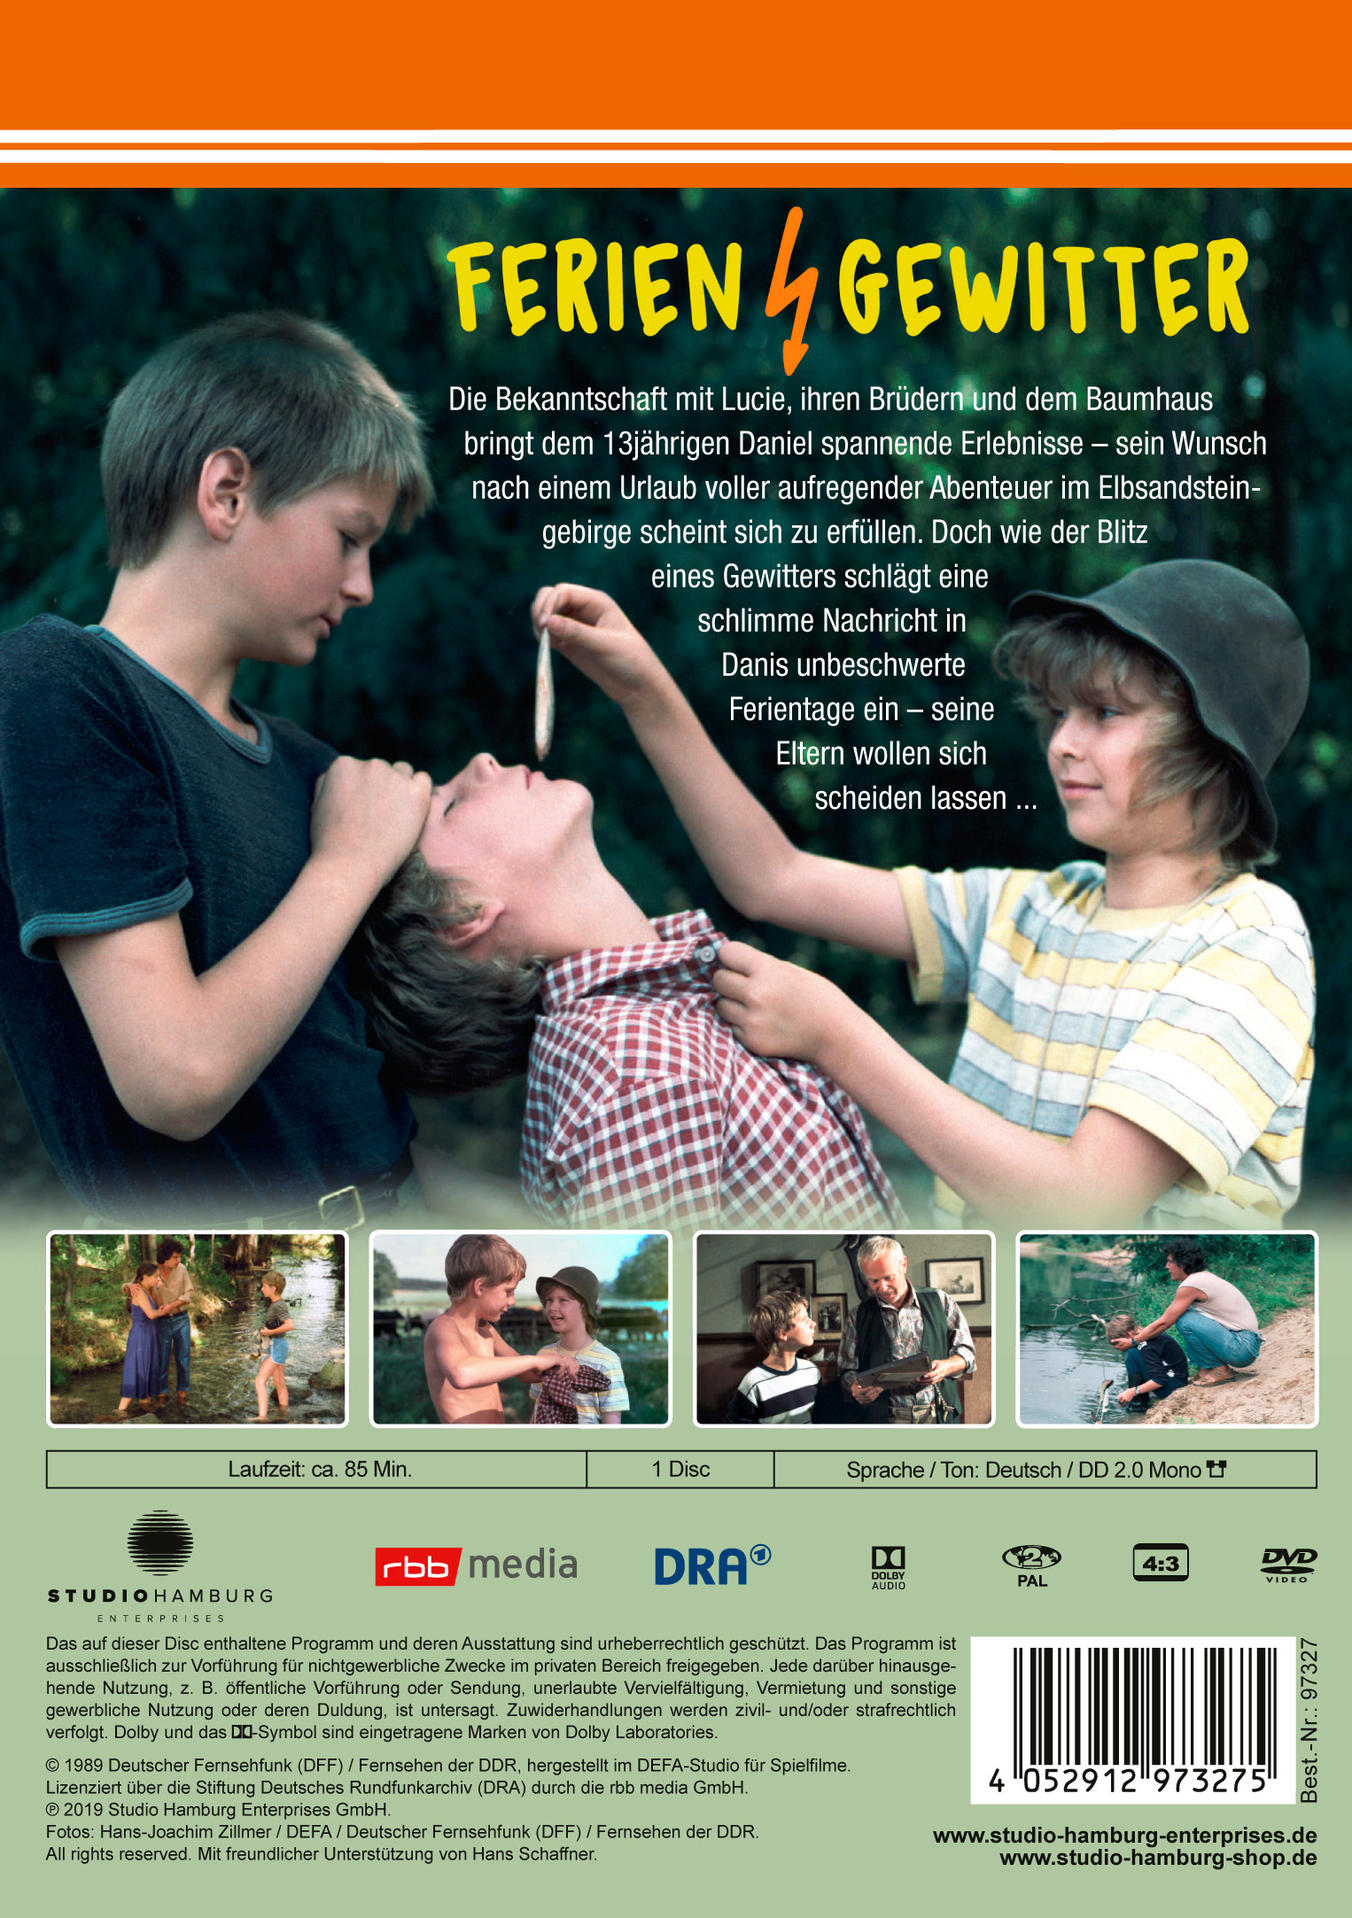 Feriengewitter (DDR TV-Archiv) DVD